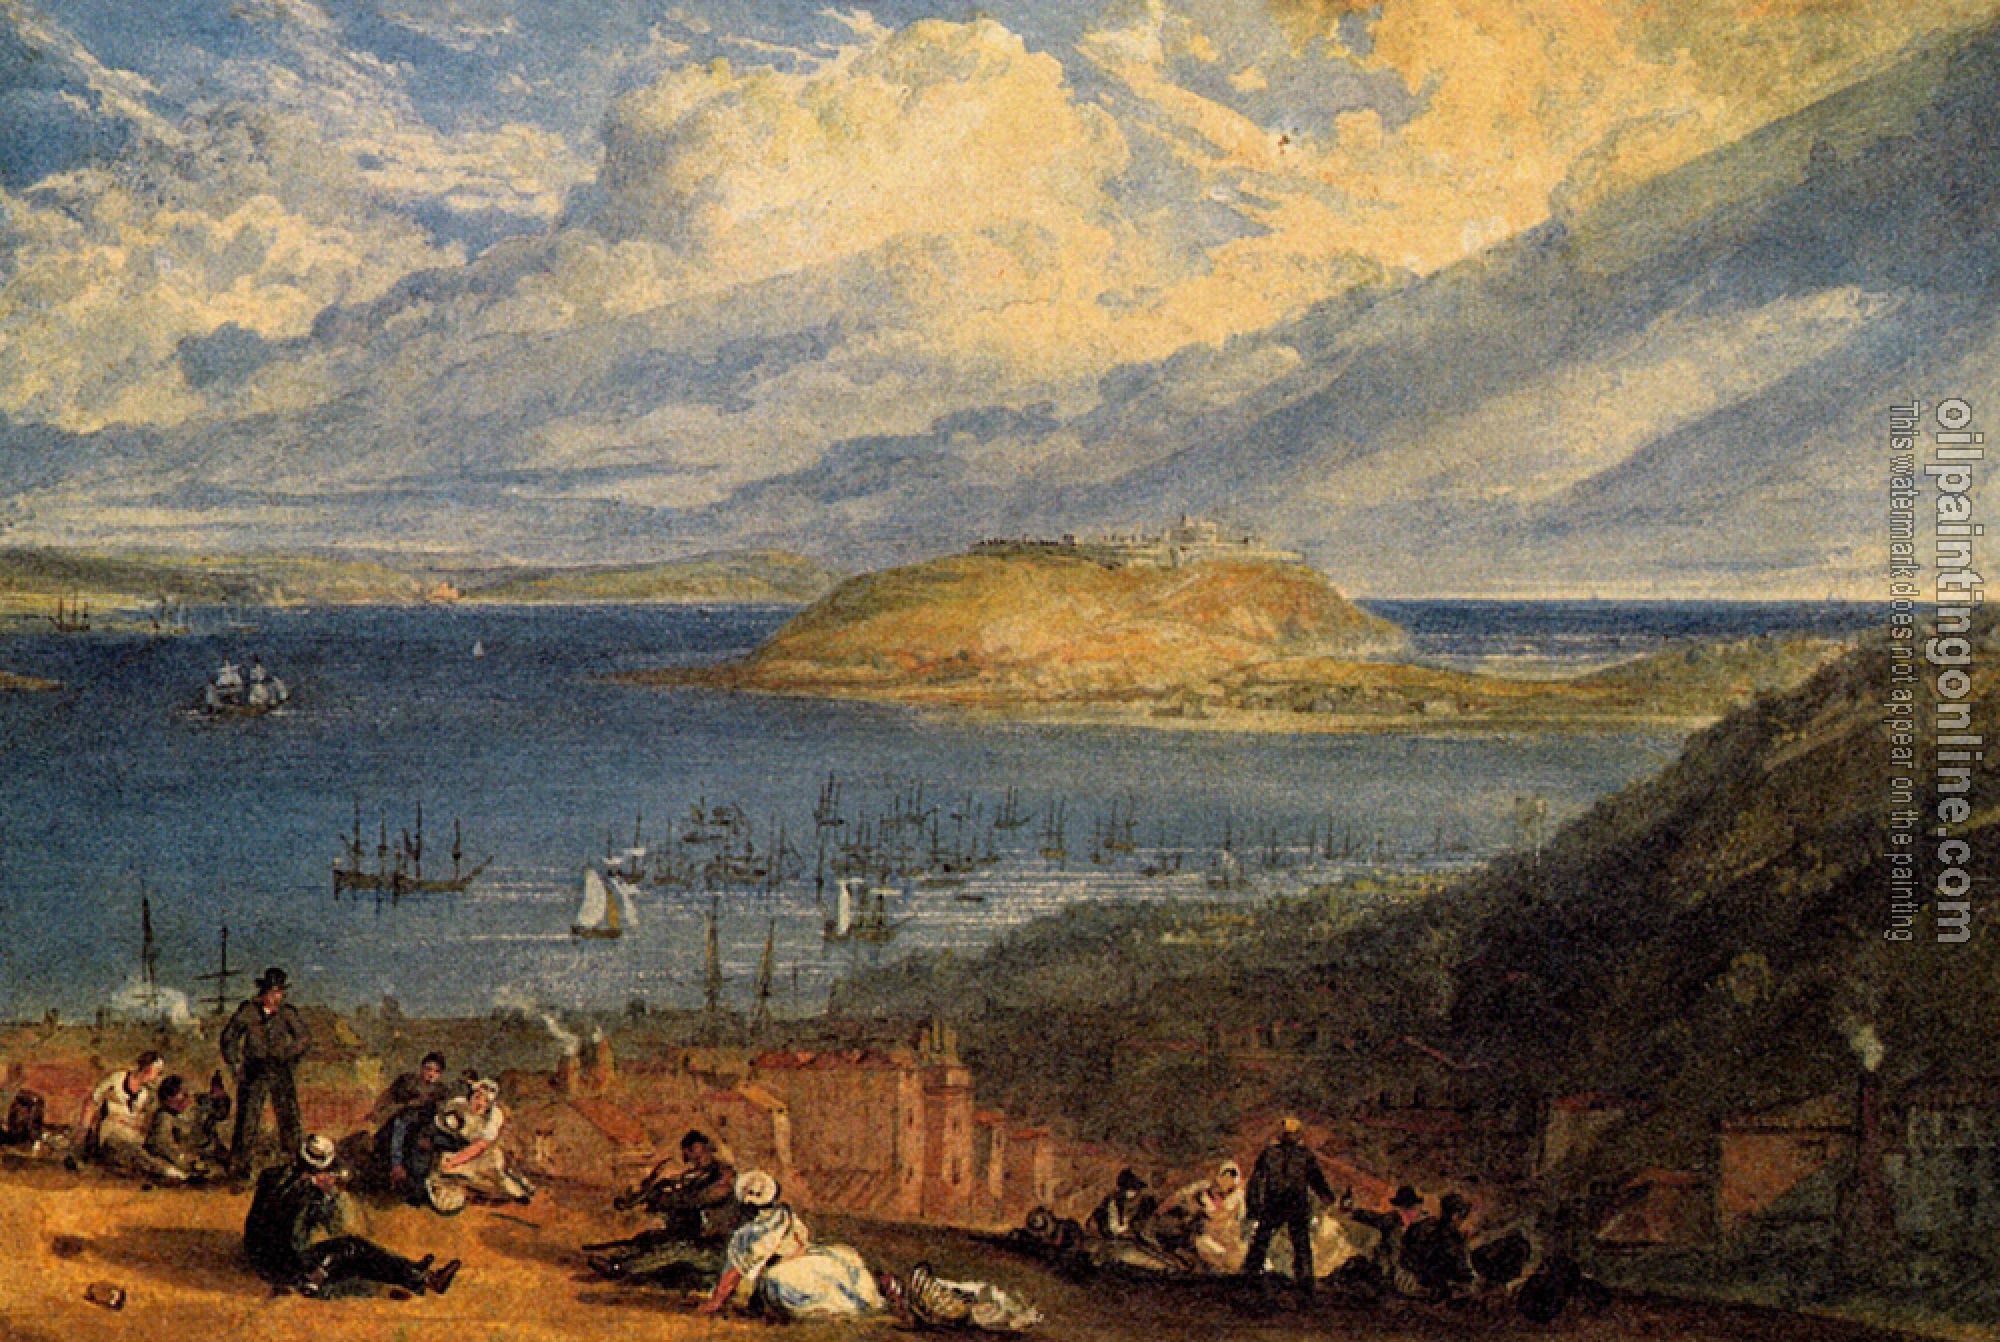 Turner, Joseph Mallord William - Falmouth Harbour, Cornwall